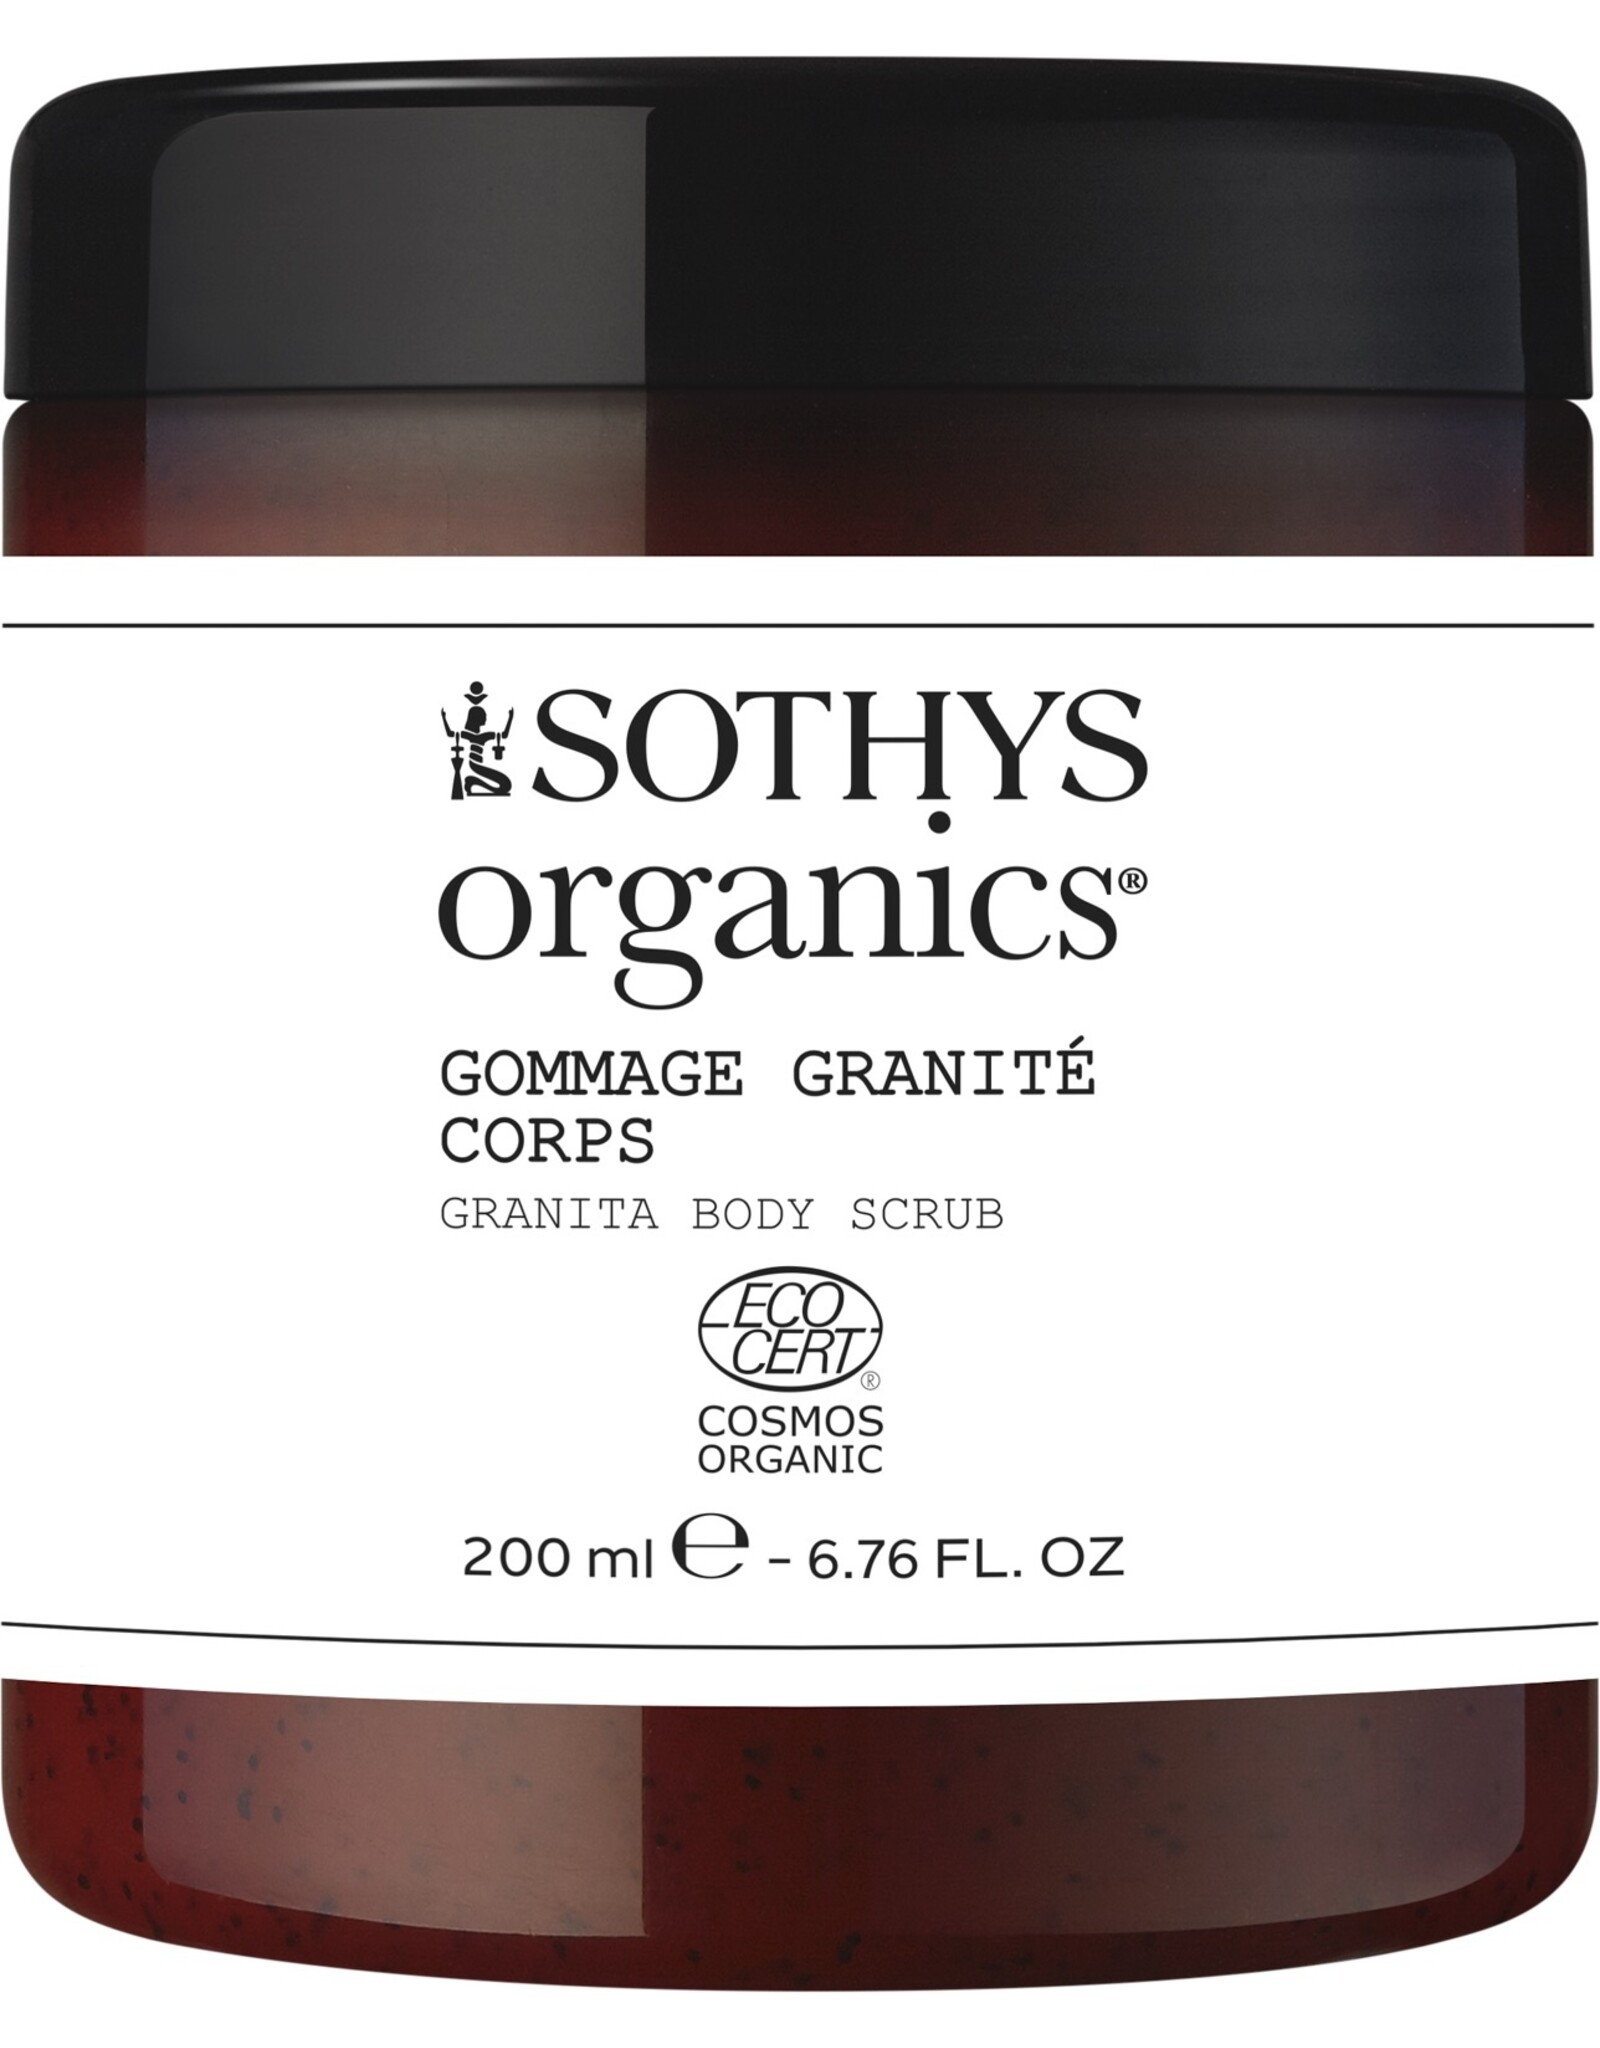 SOTHYS Gommage granité corps - Sothys Organics®